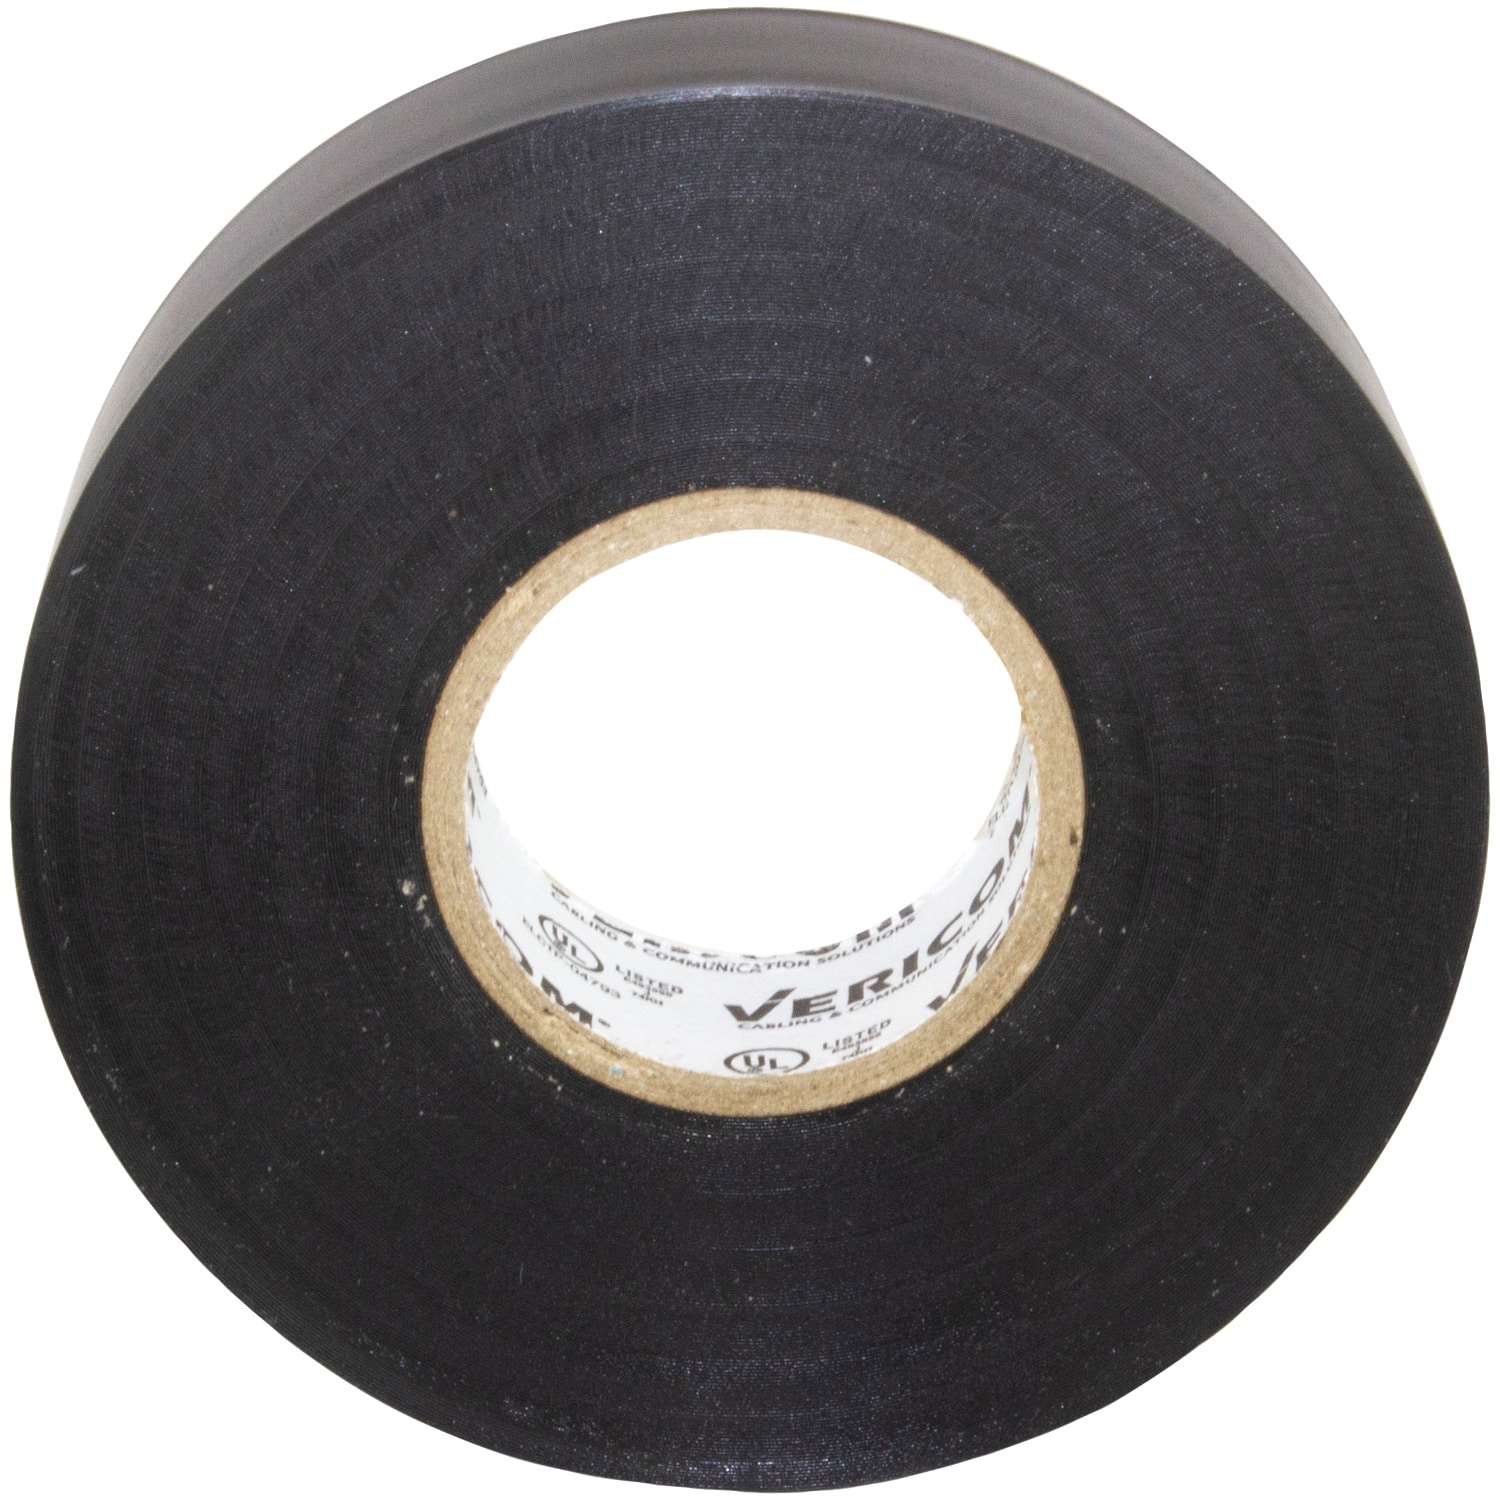 Star brite Vinyl Electrical Liquid Tape Black